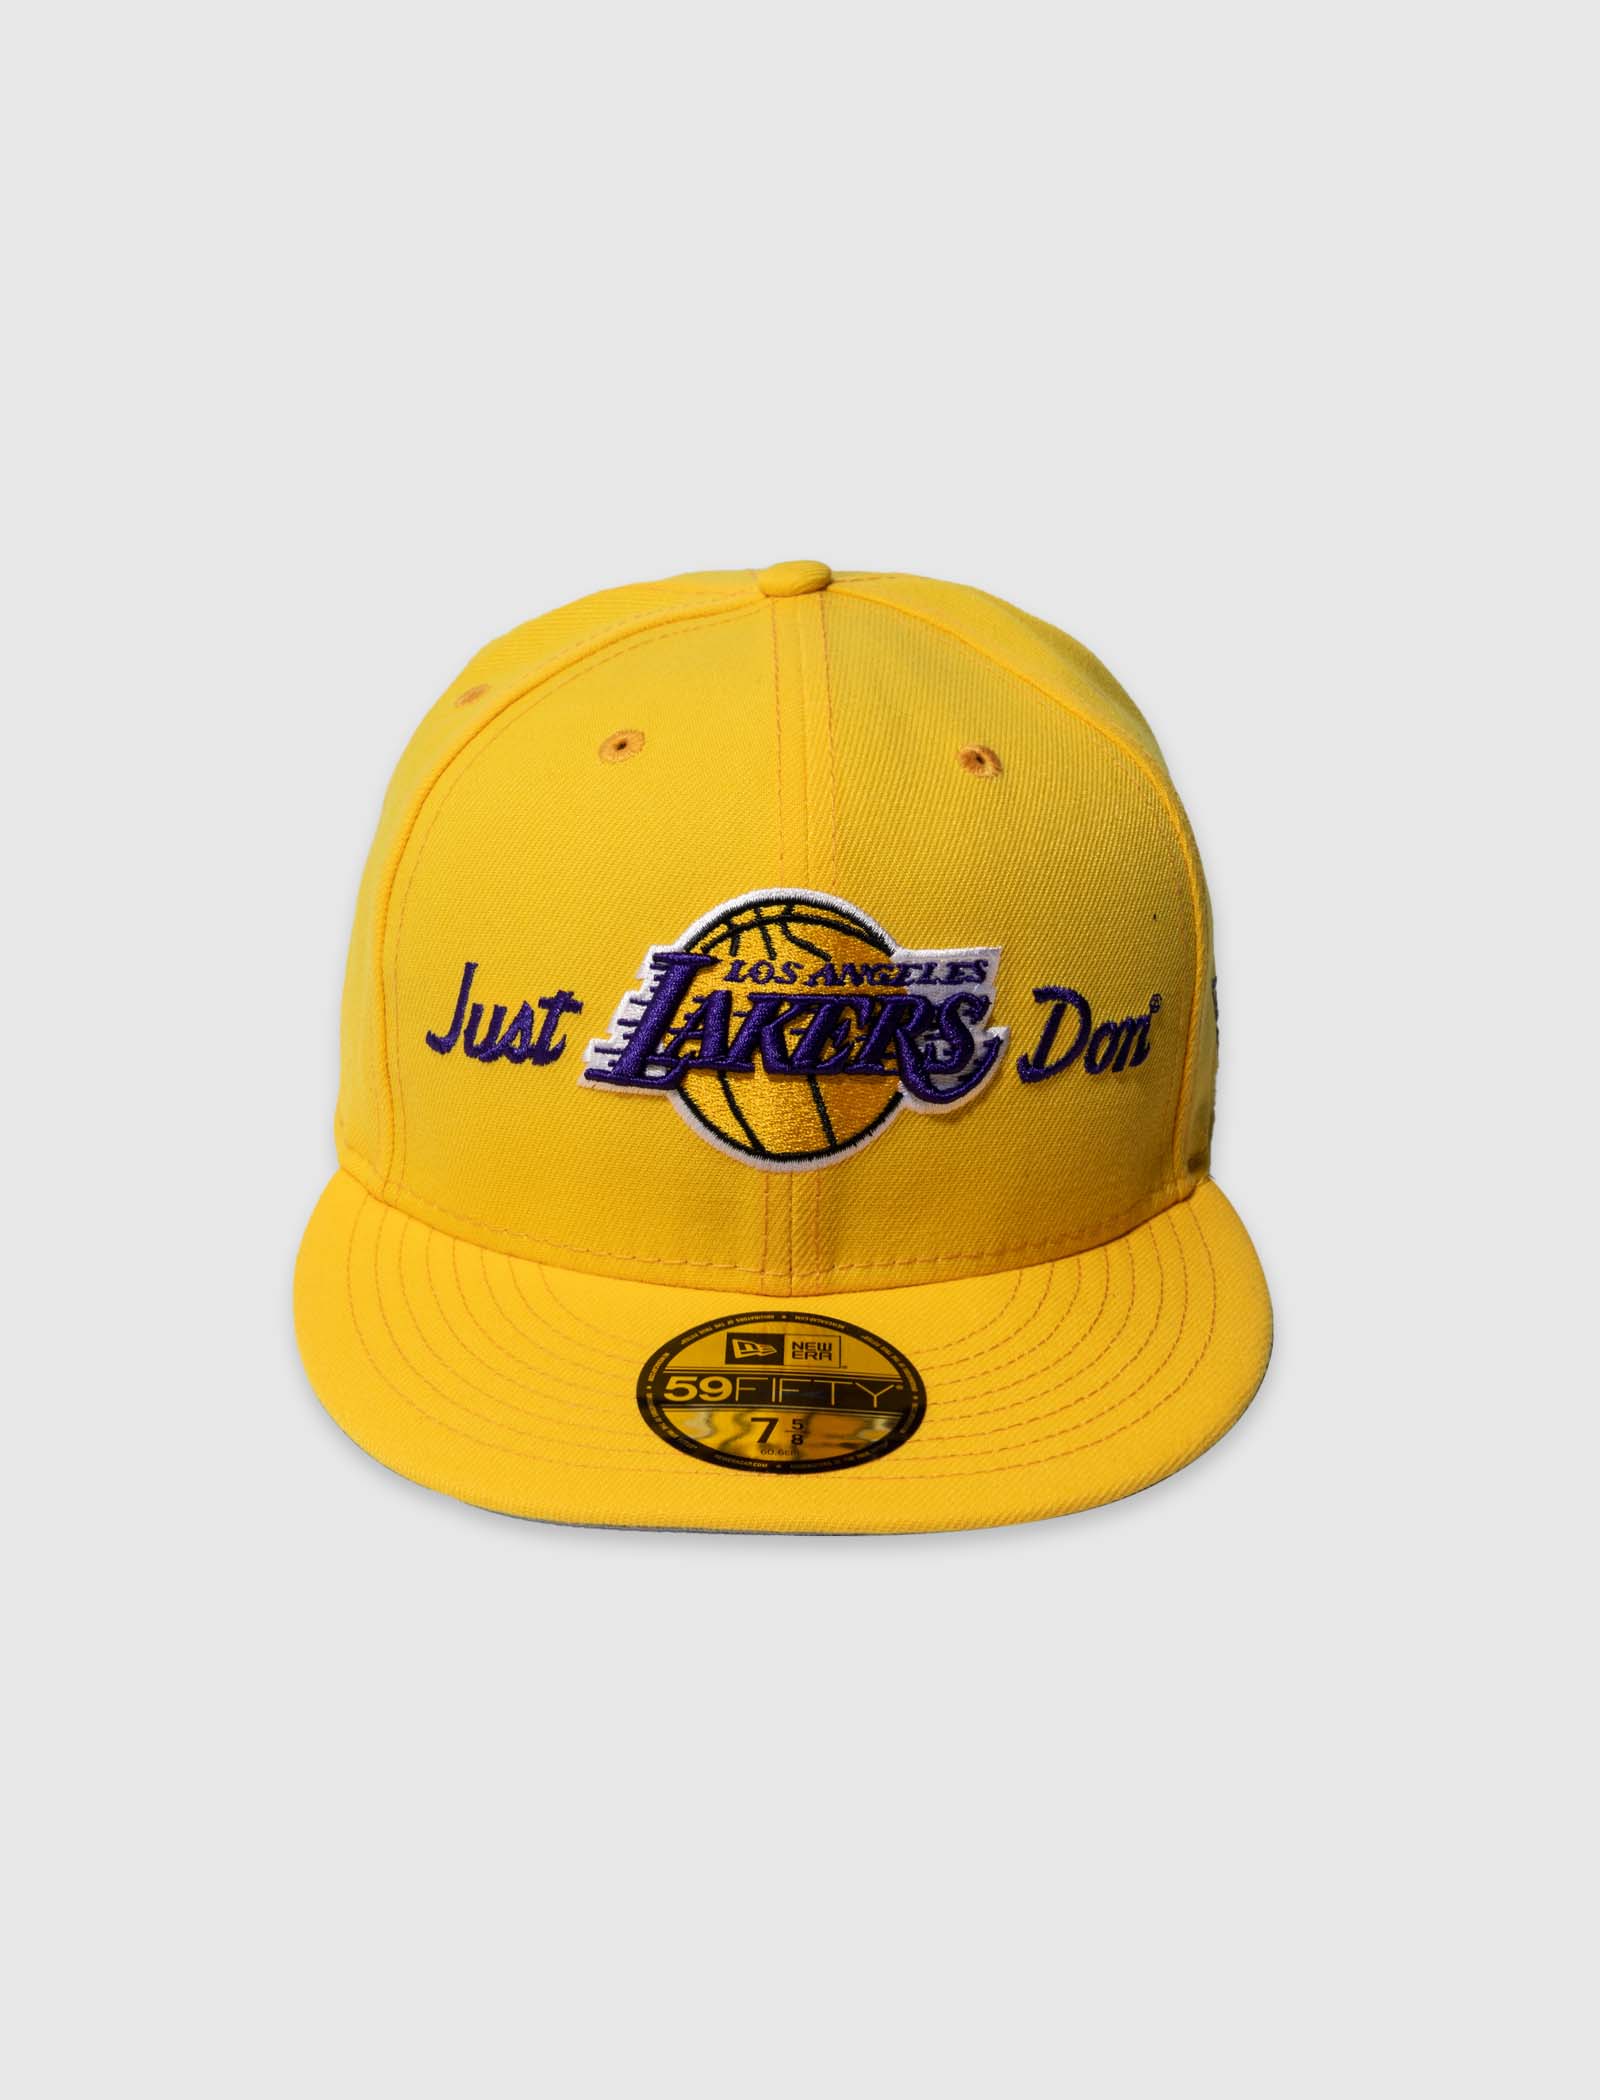 LA LAKERS LOS ANGELES NBA NEW ERA Adidas HATS FITTED 7 1/2 5/8